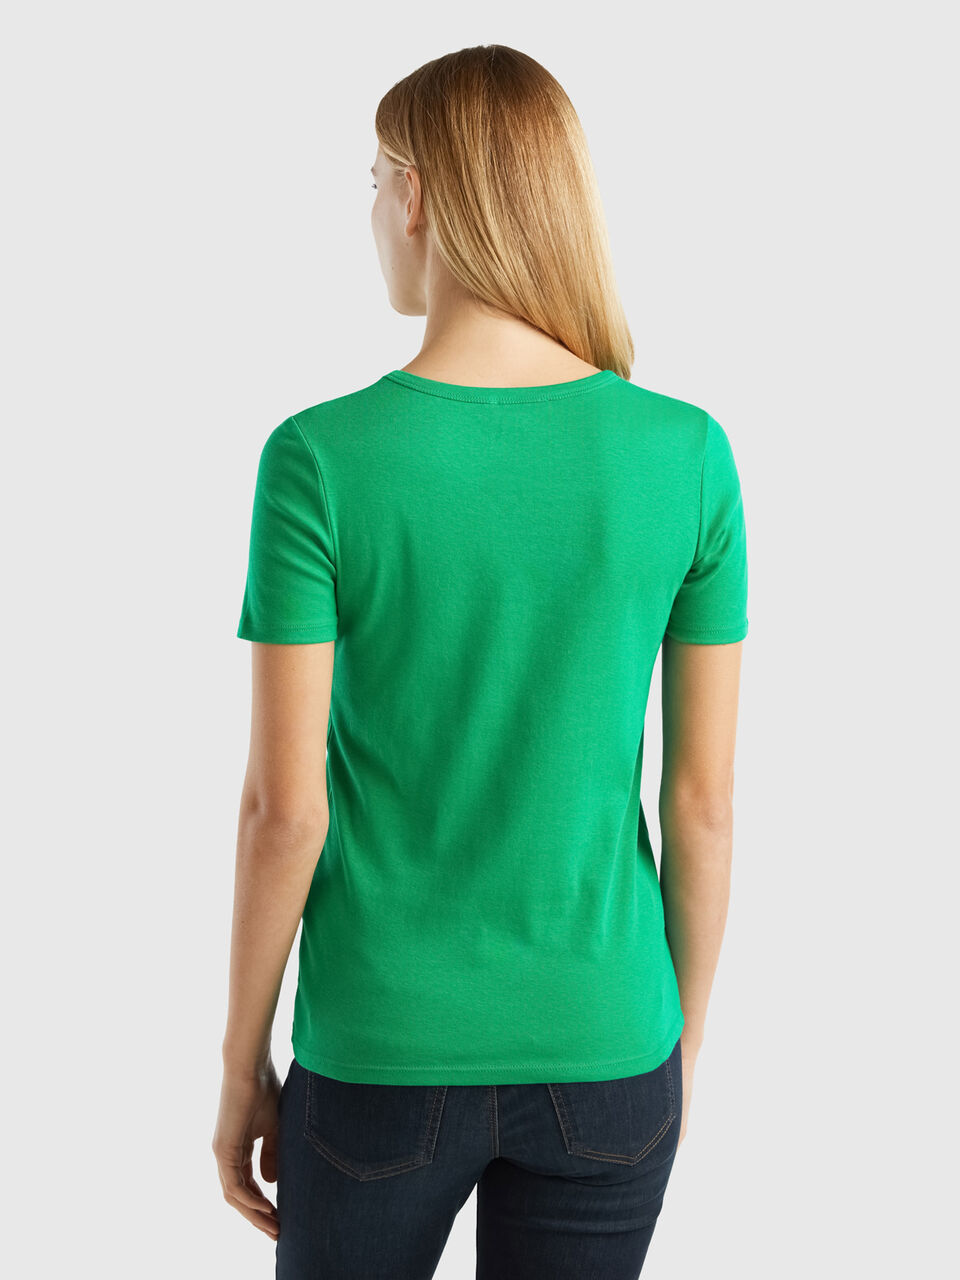 T-shirt in 100% cotton with logo Green - Benetton print glitter 